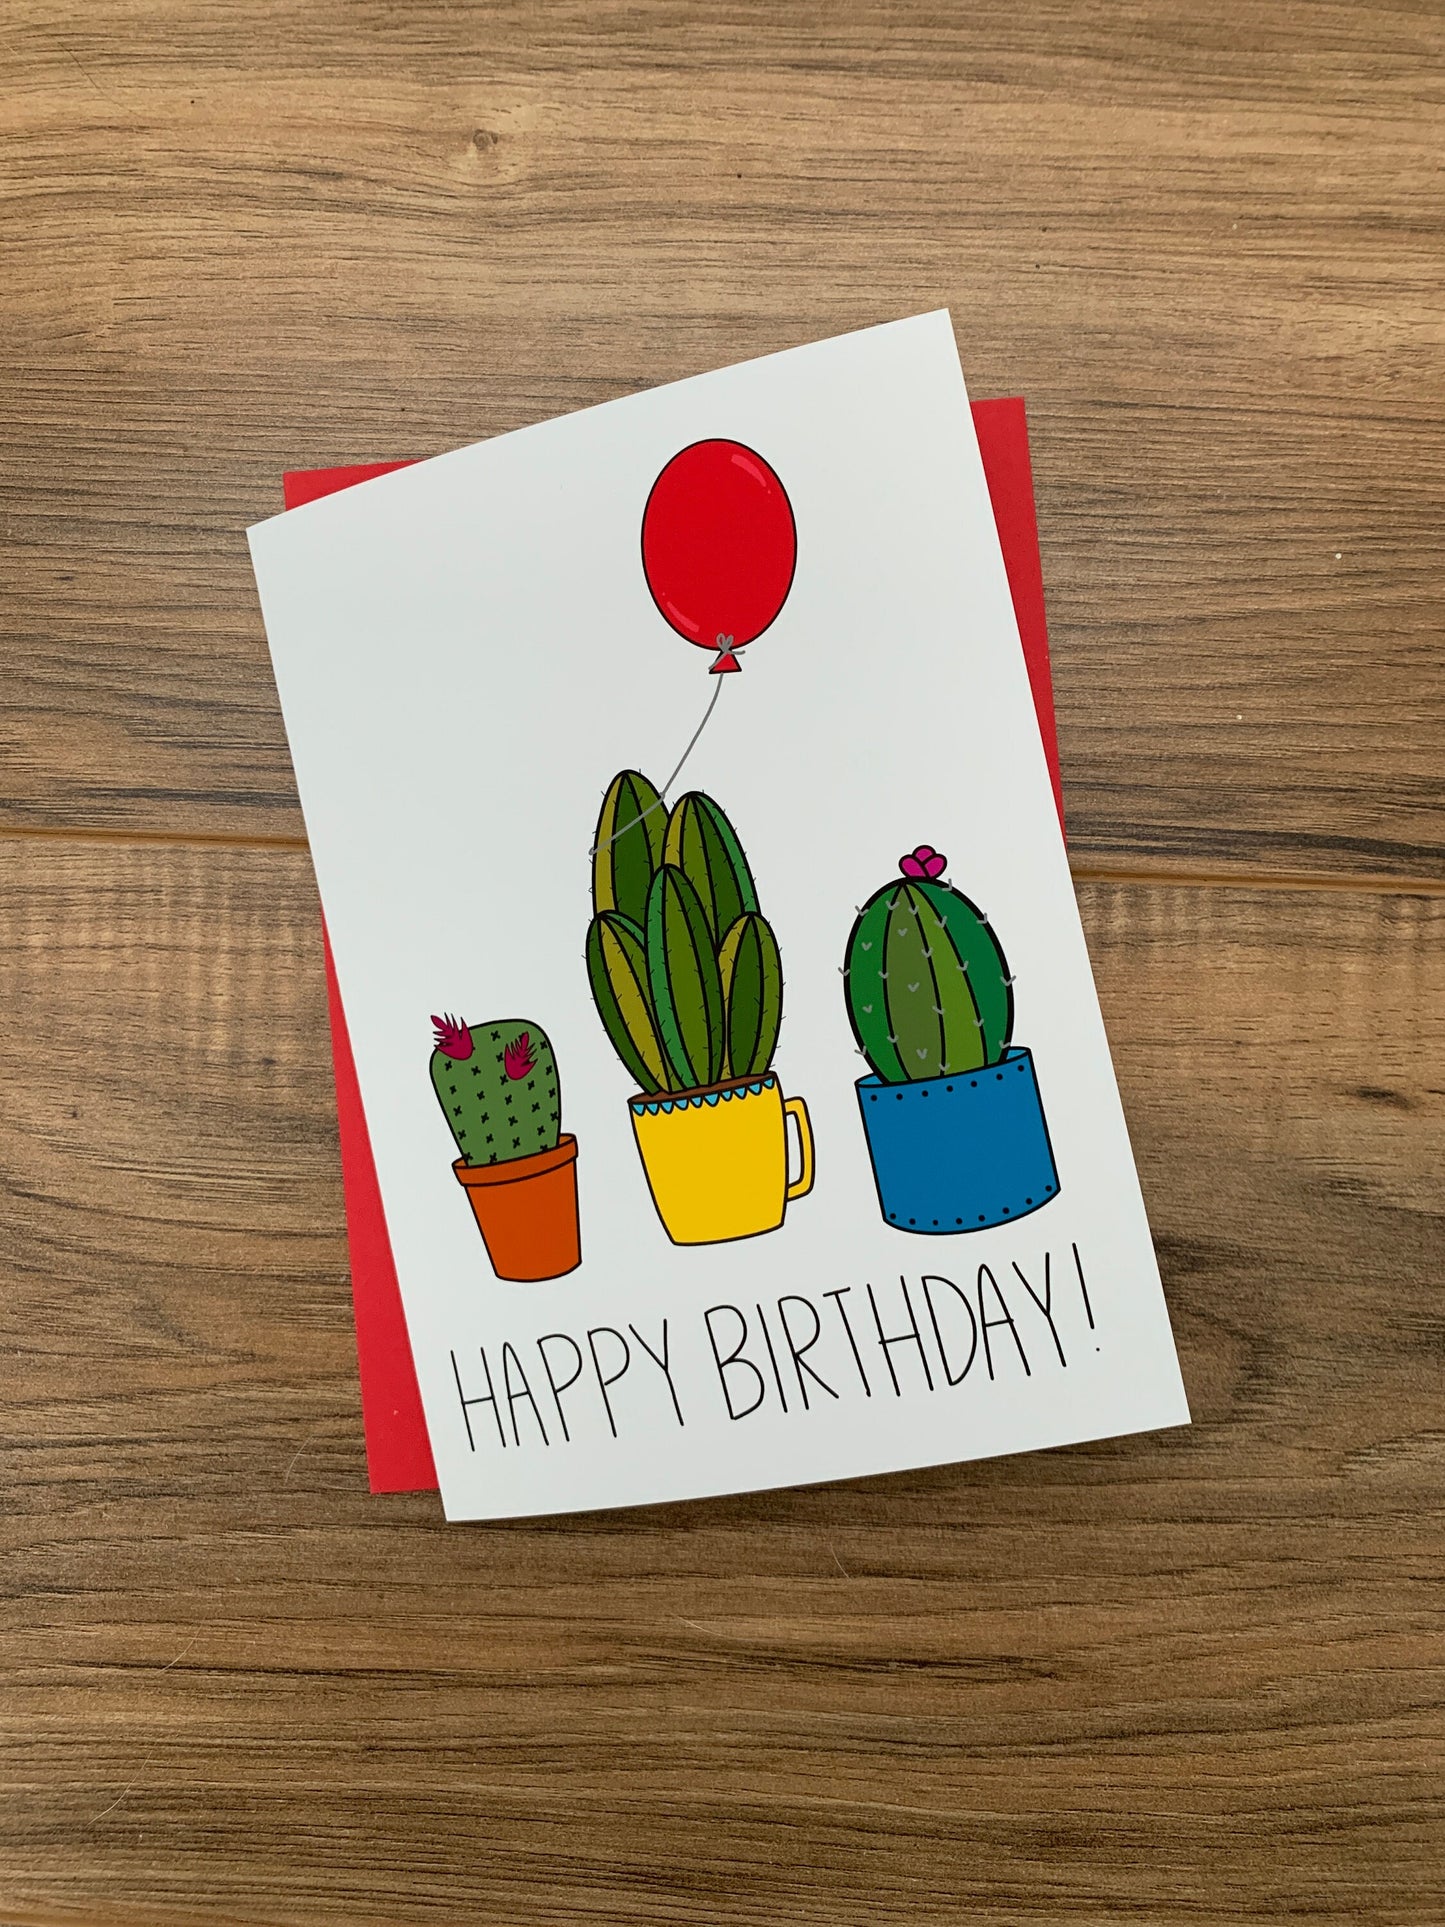 Handmade Succulent and Cactus Birthday Card by StoneDonut Design